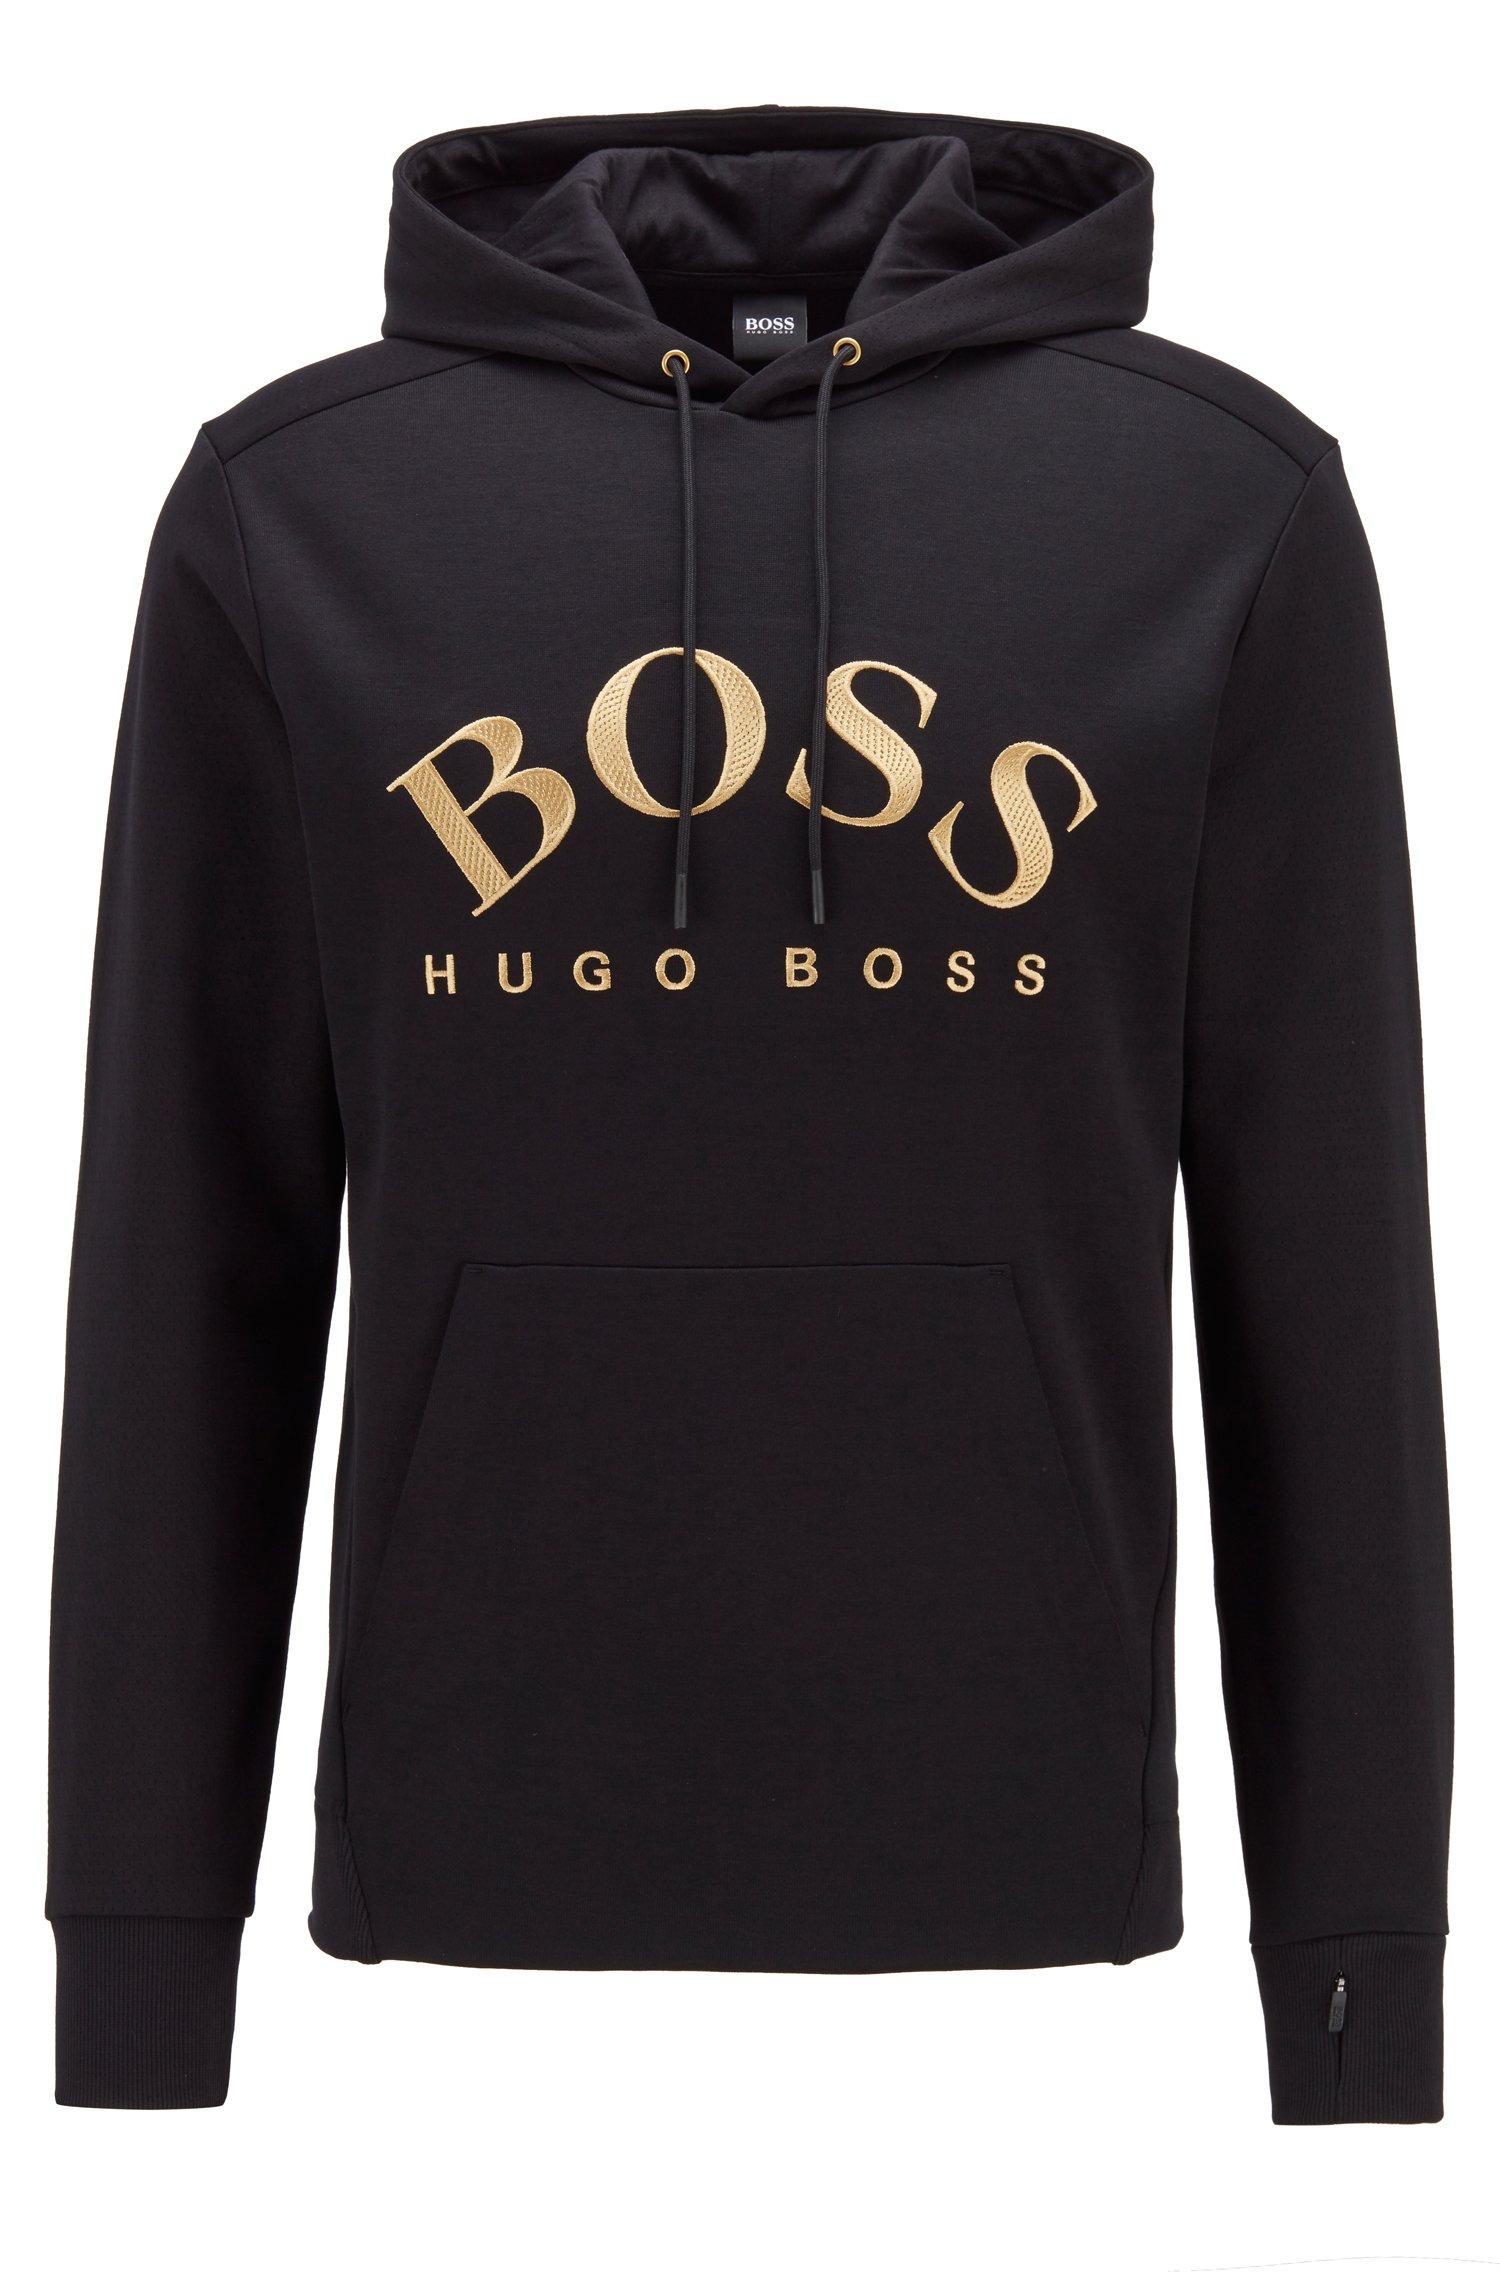 BOSS by Hugo Boss Cotton Soody Logo Hoodie, Black Hooded Sweatshirt for ...